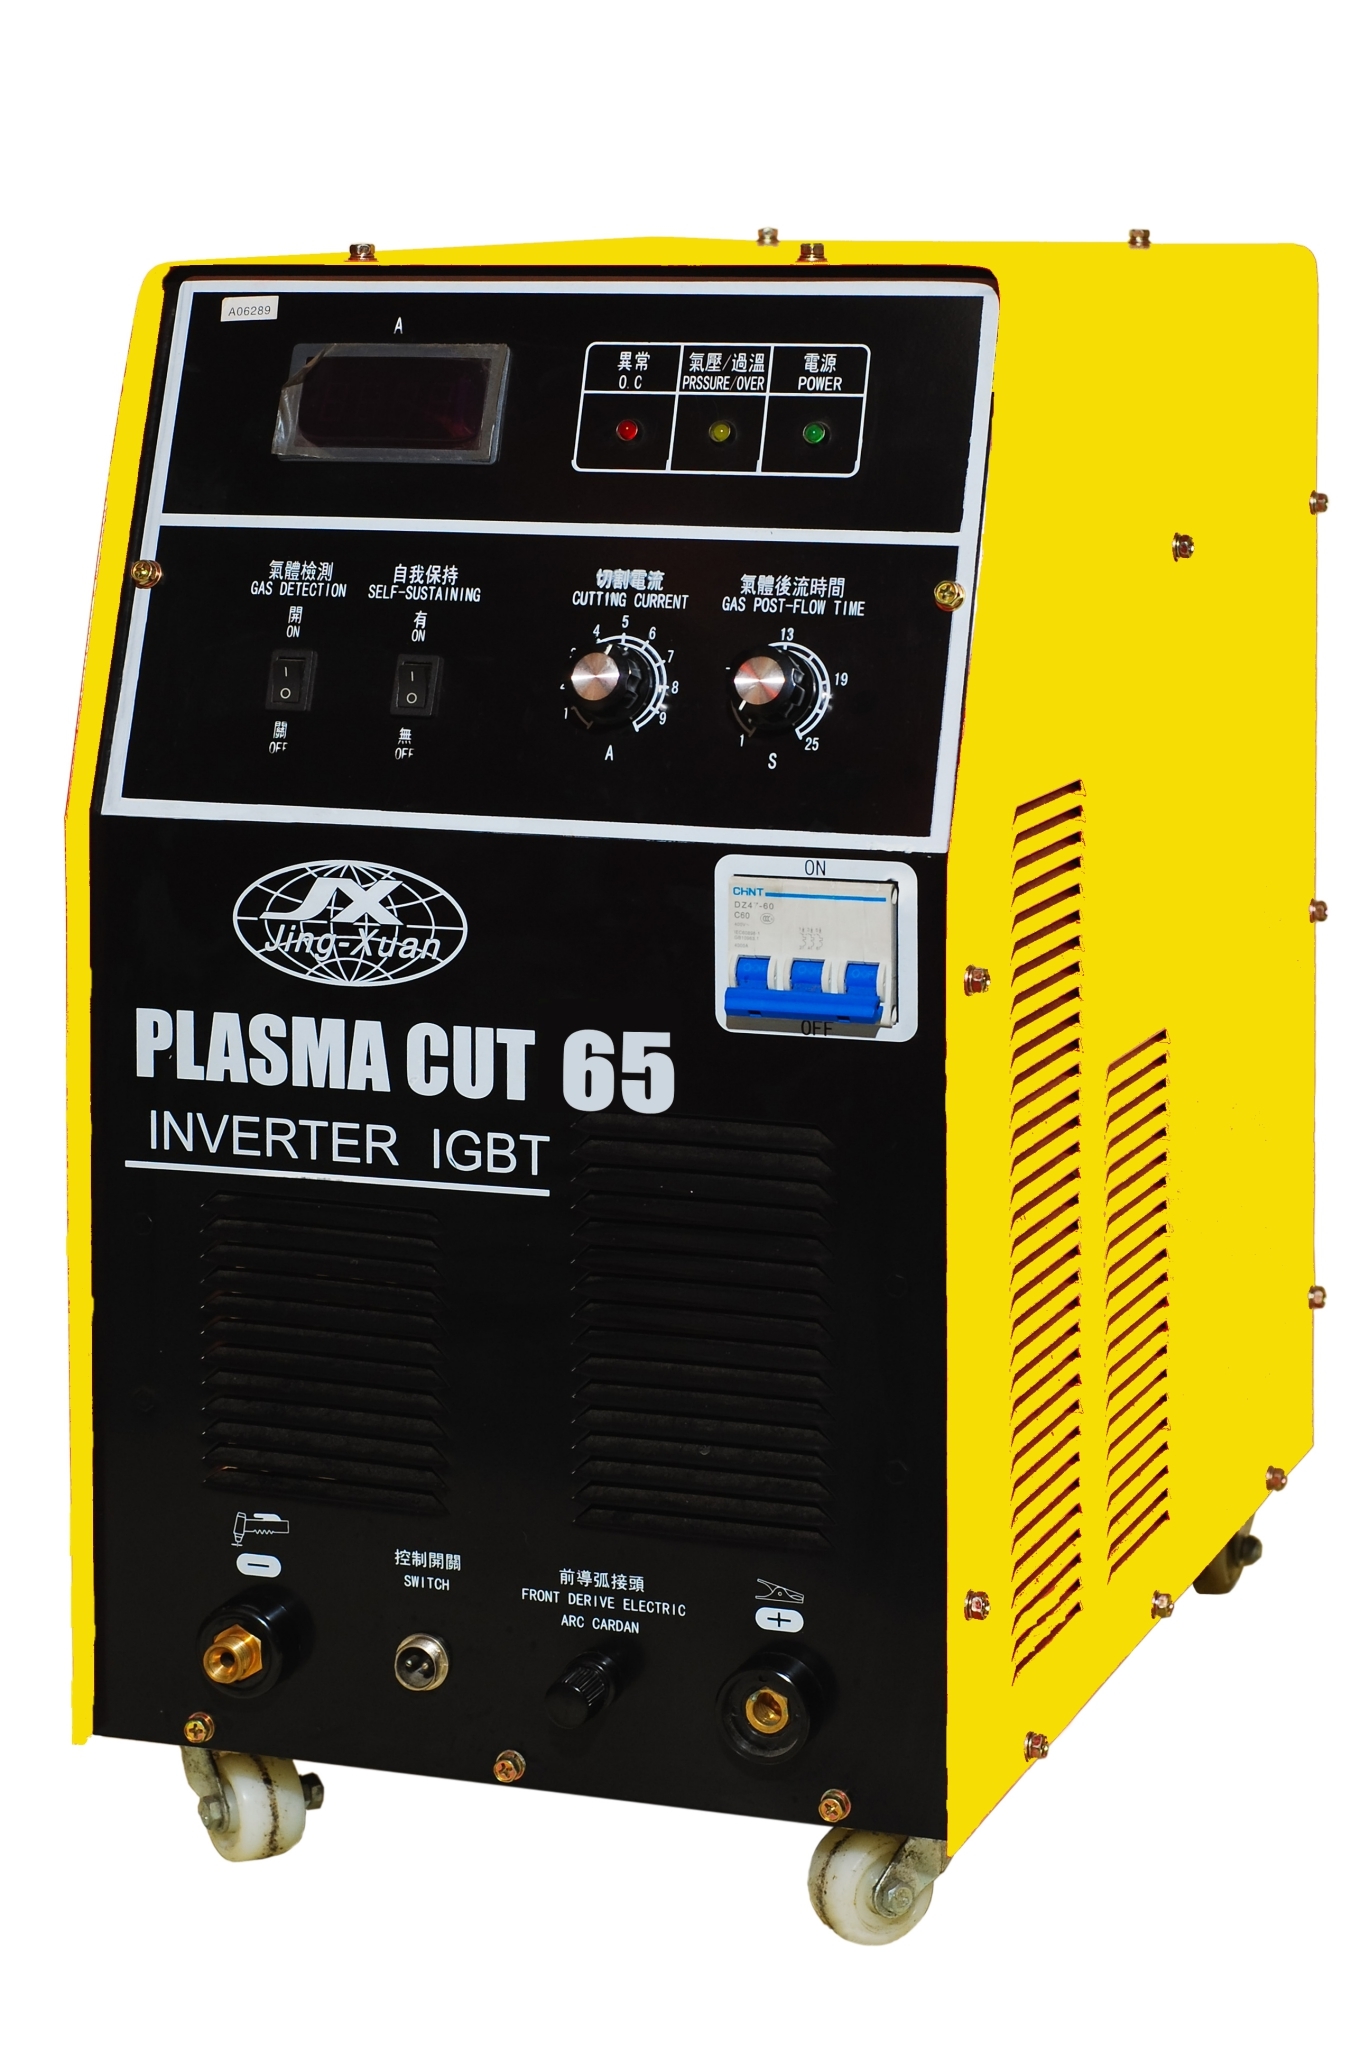 Plasma Cutting 65 